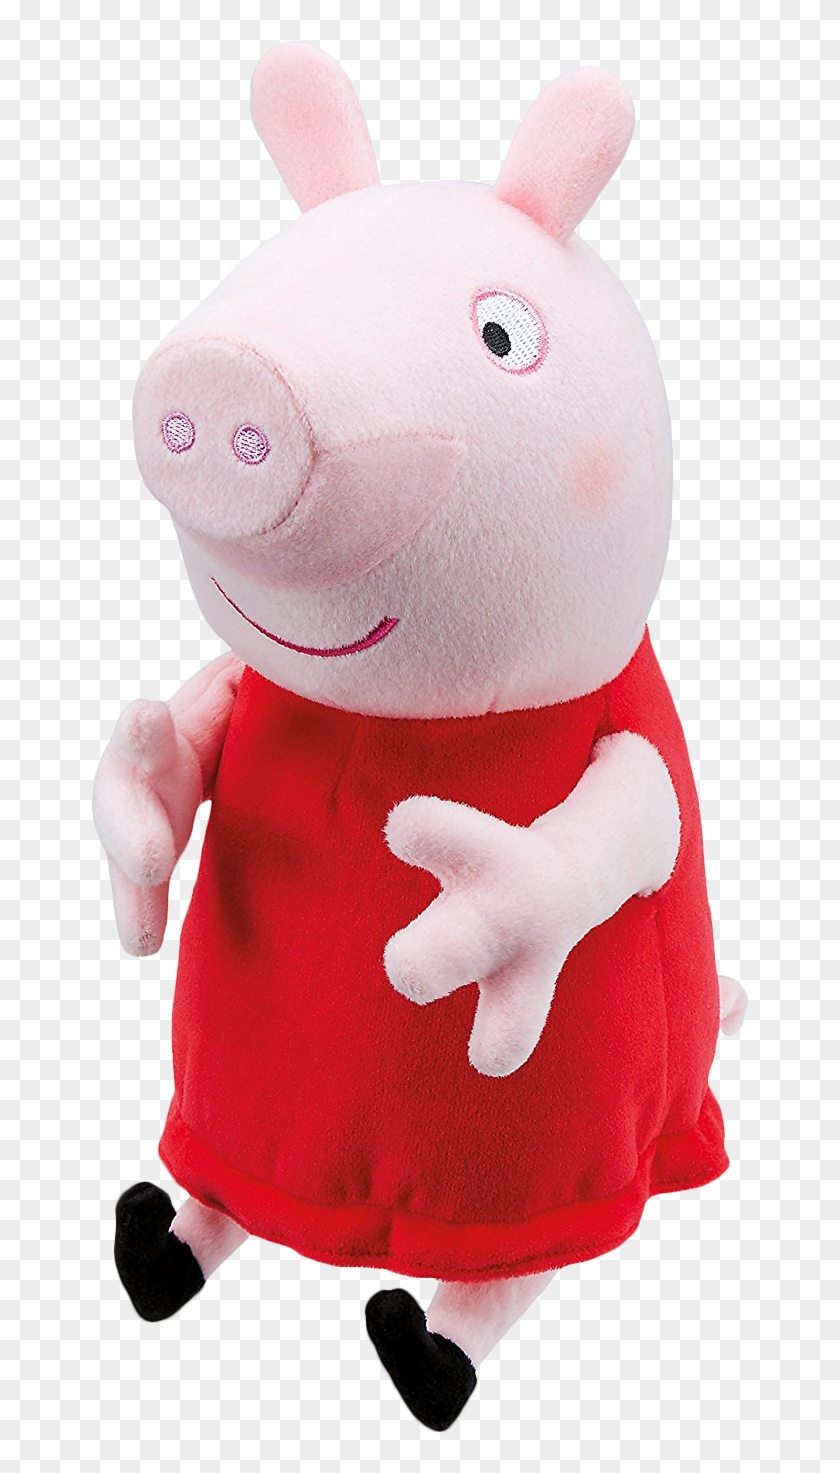 Peppa - Laughing Peppa Pig Toy #373915